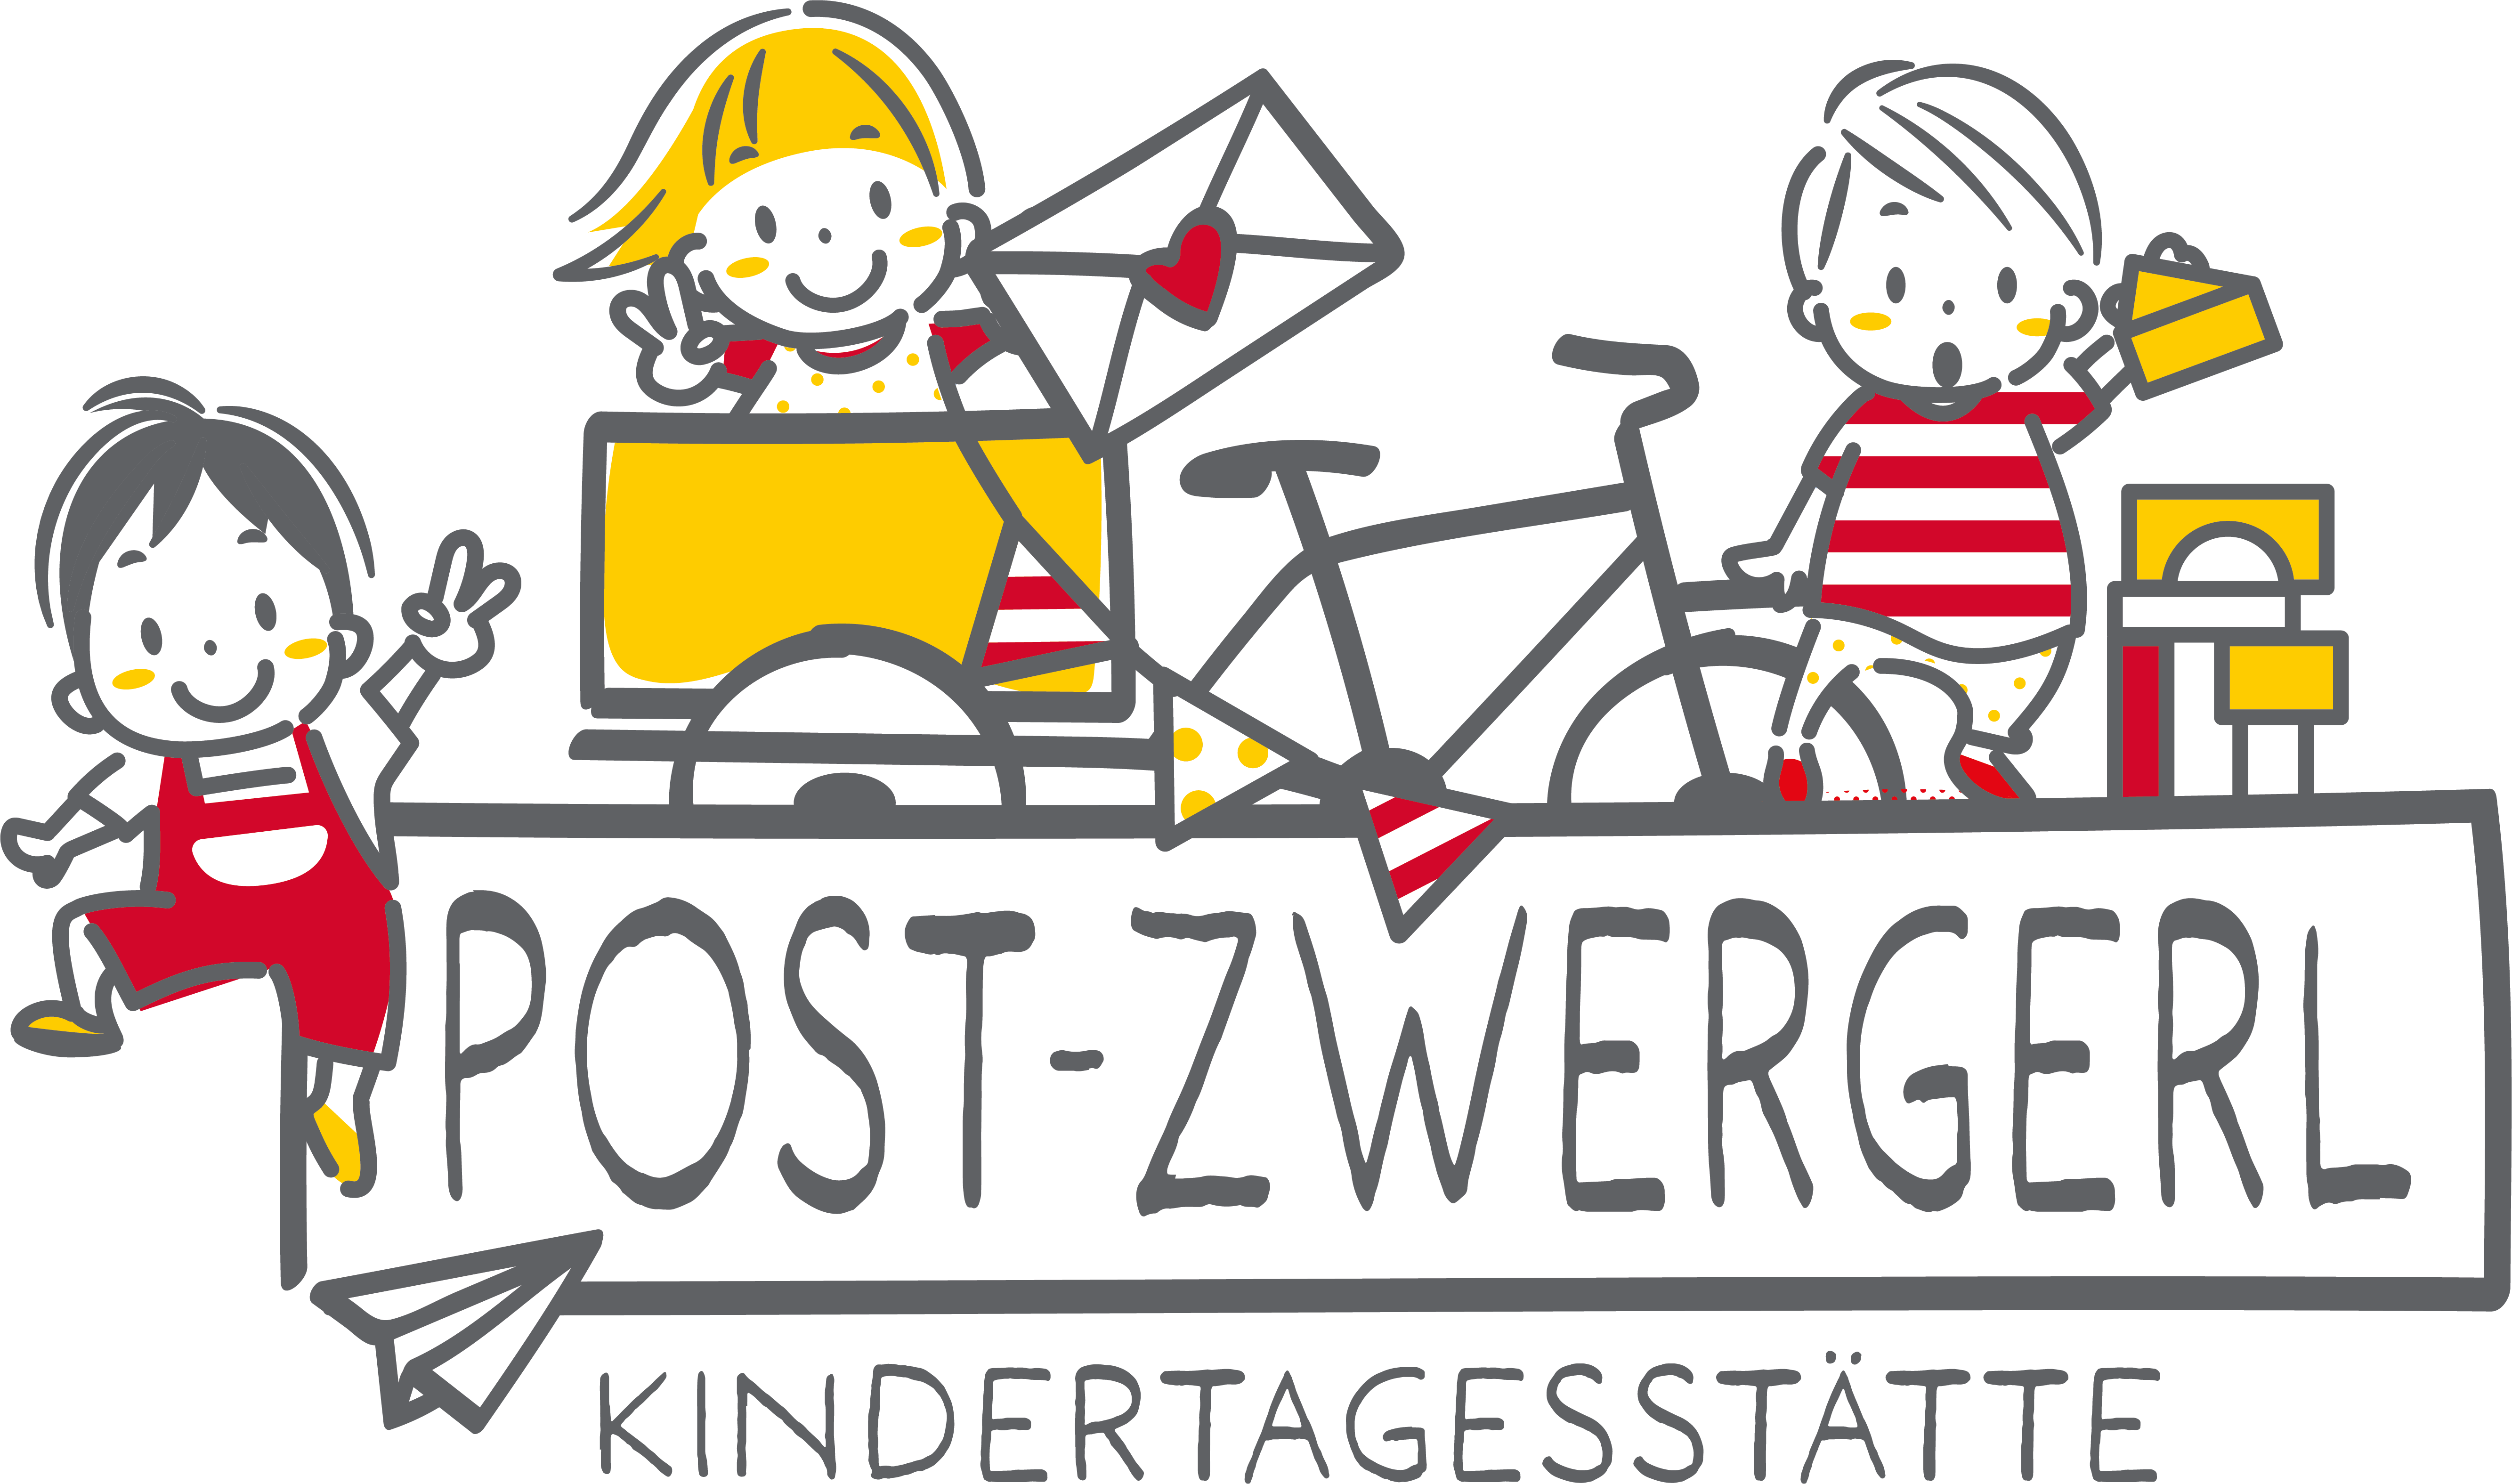 PostZwergerl Logo RZ